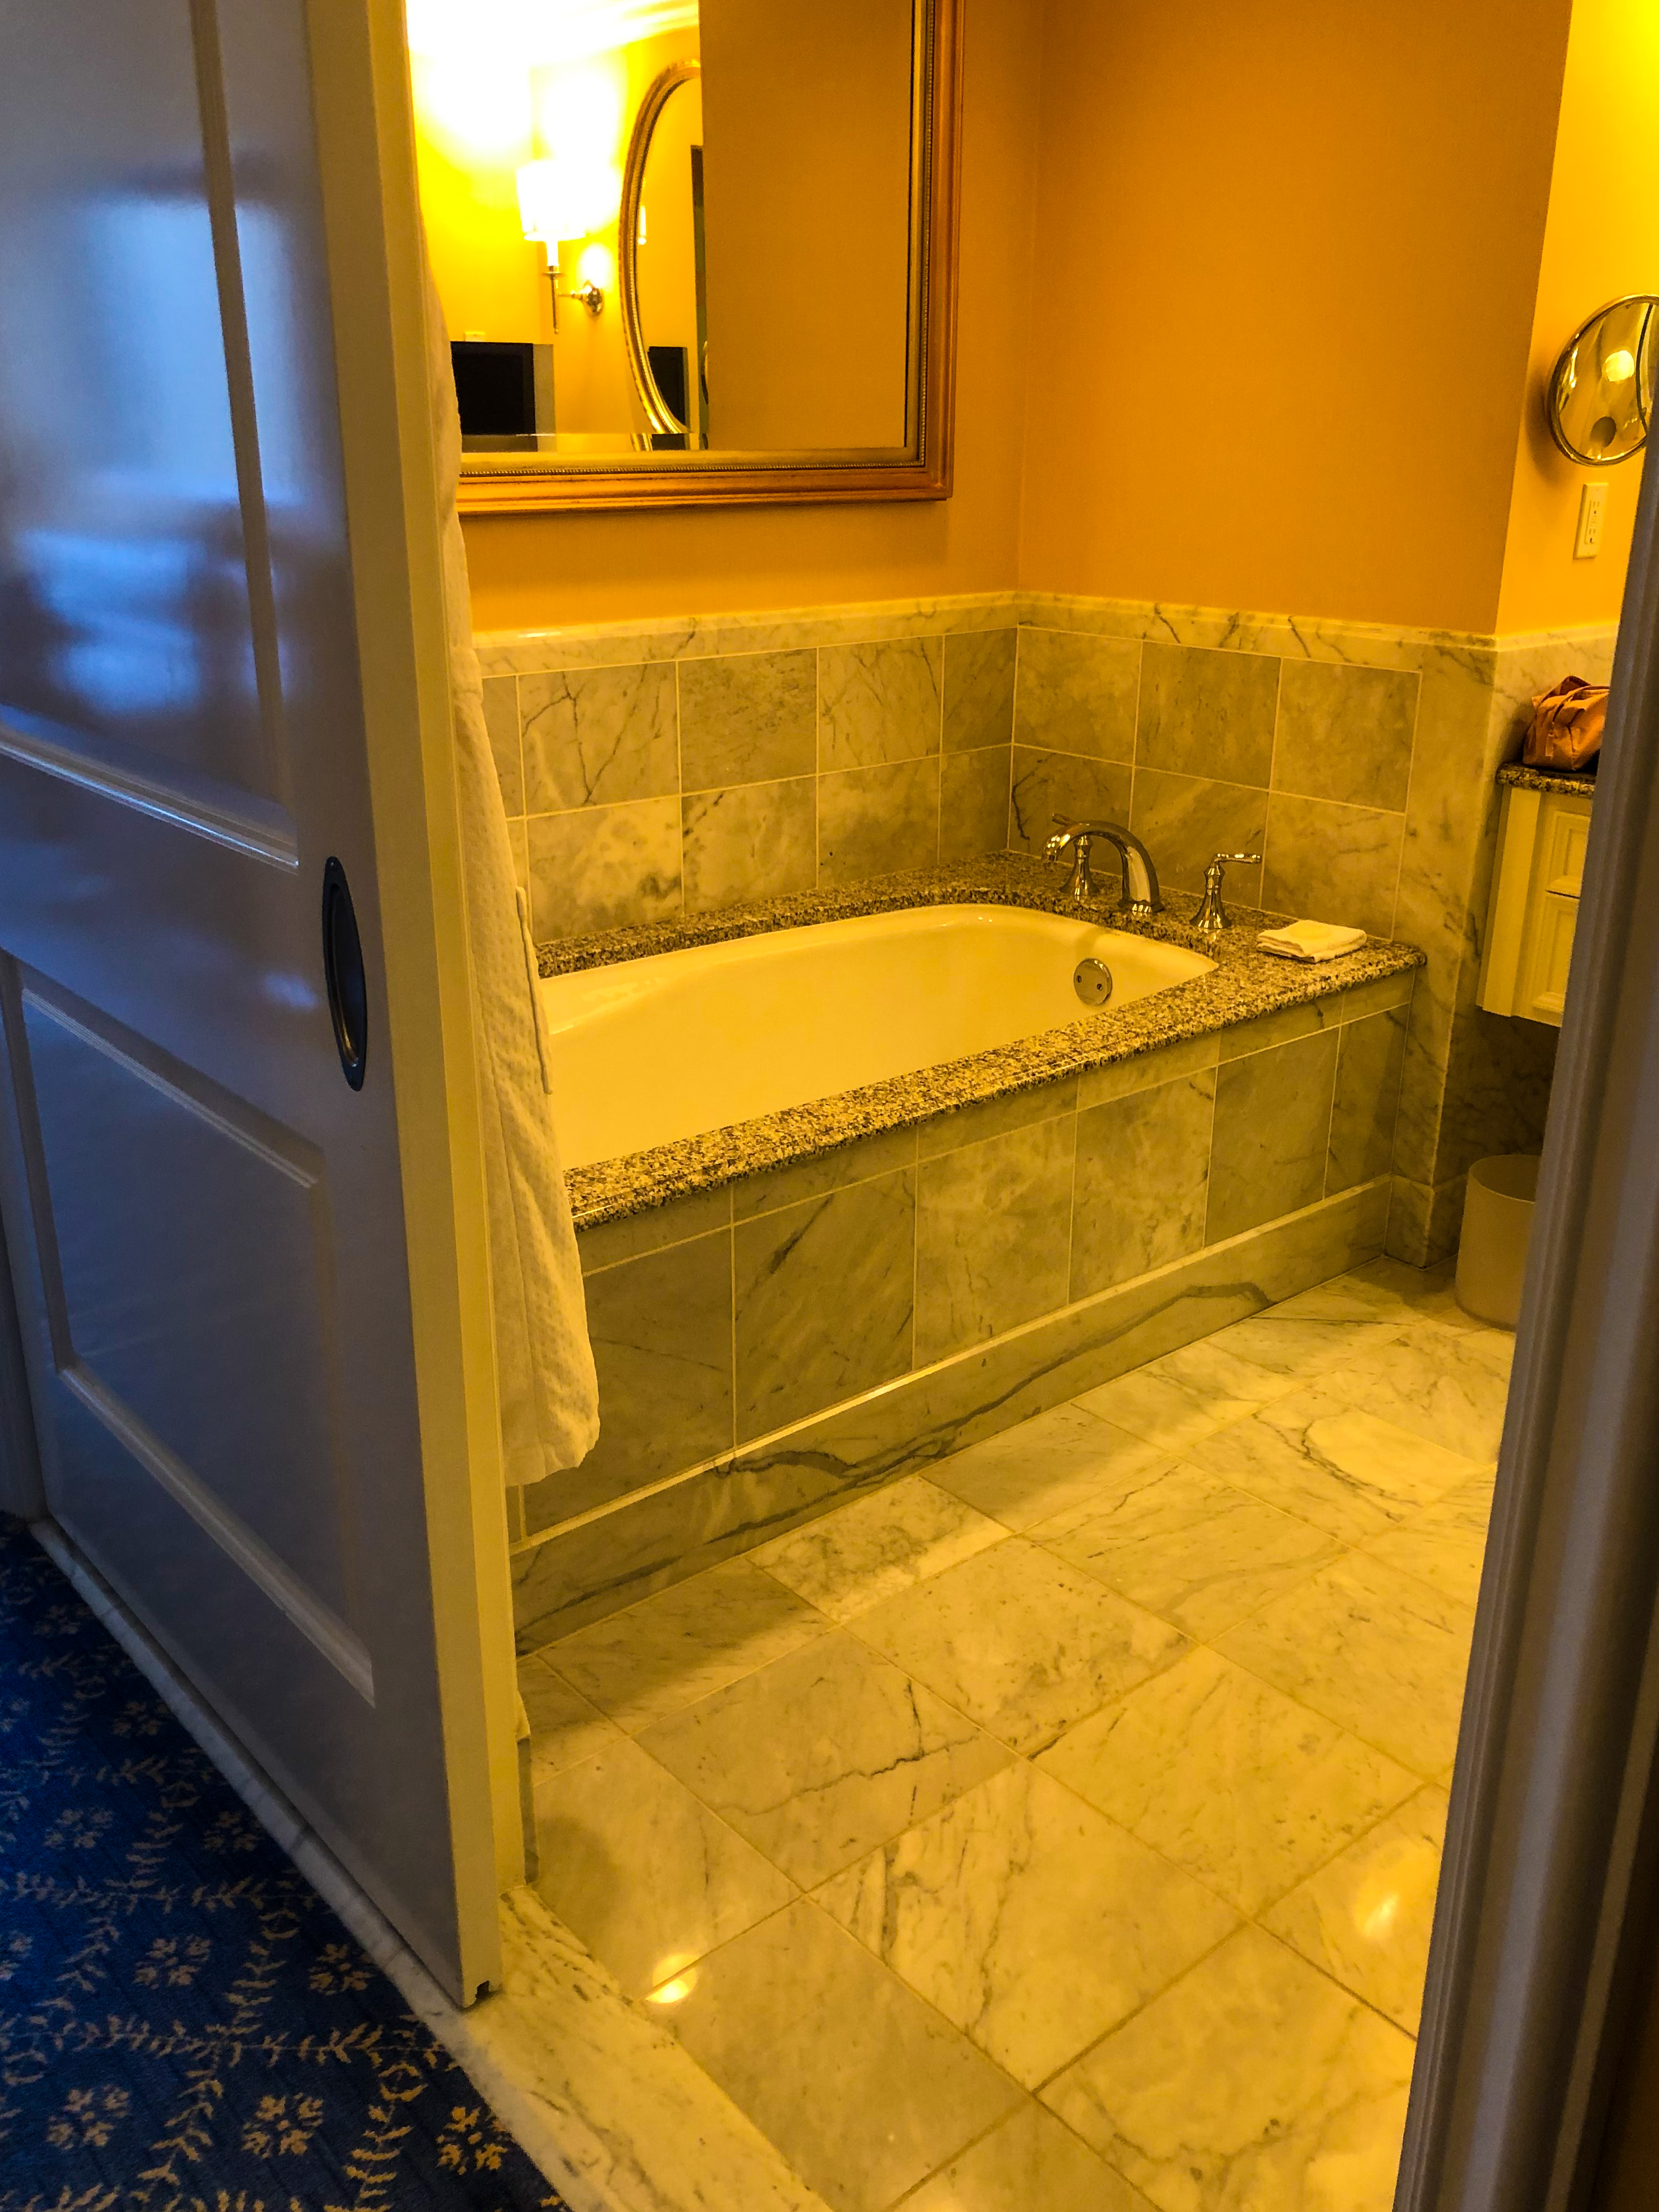 Four Seasons Hotel Westlake Village deluxe king room bathtub